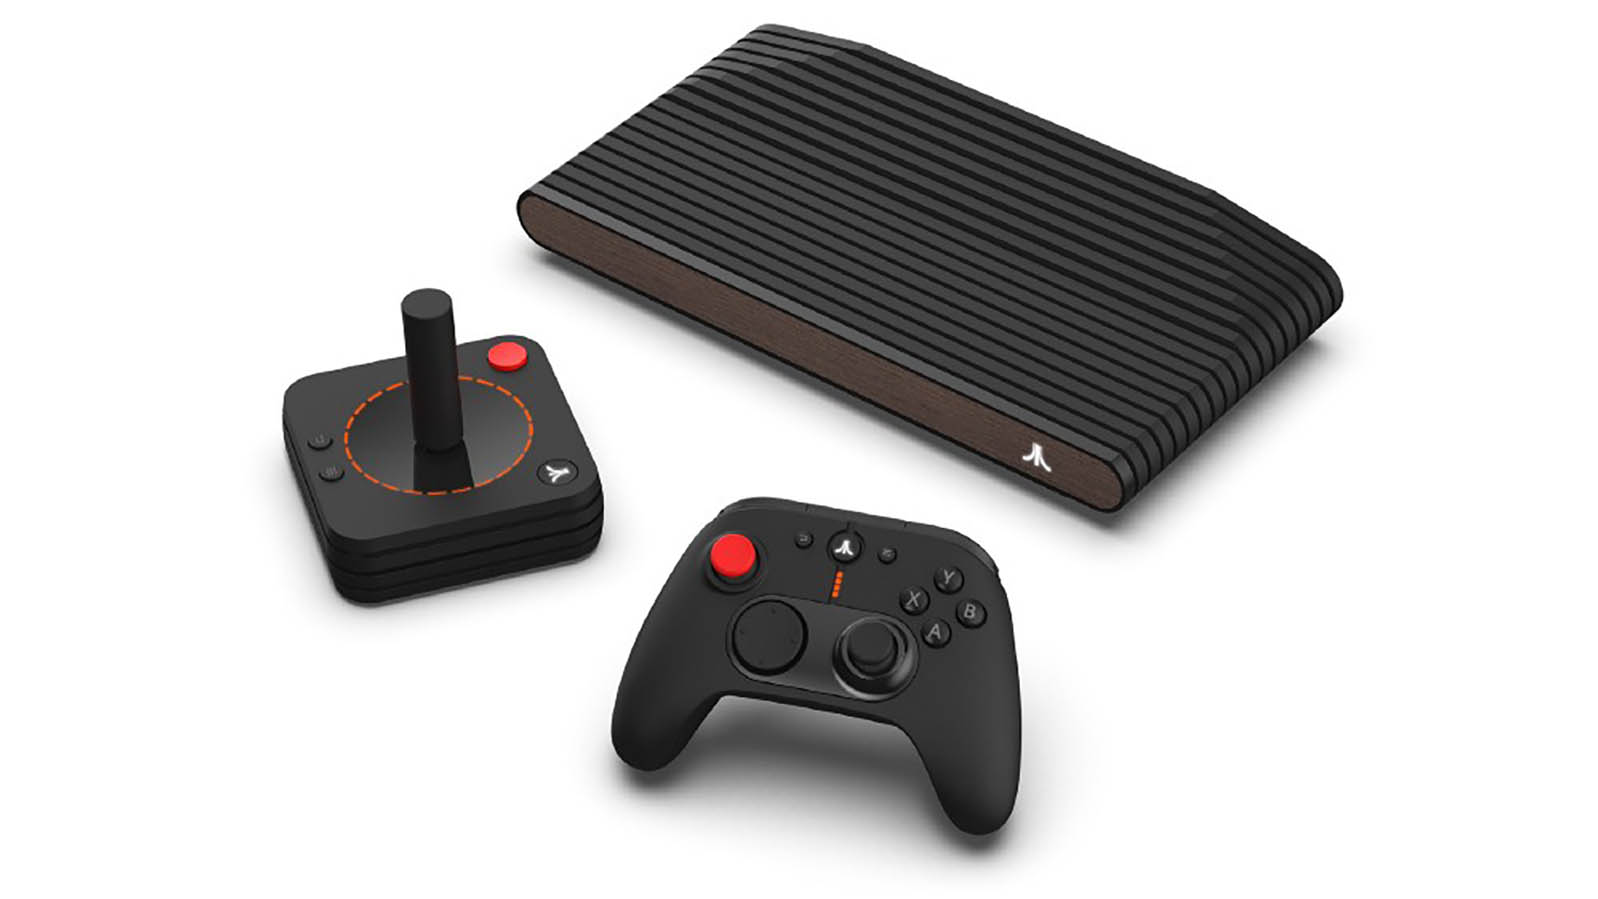 Atari VCS Console Gets Plex Support Ahead of 2020 Launch